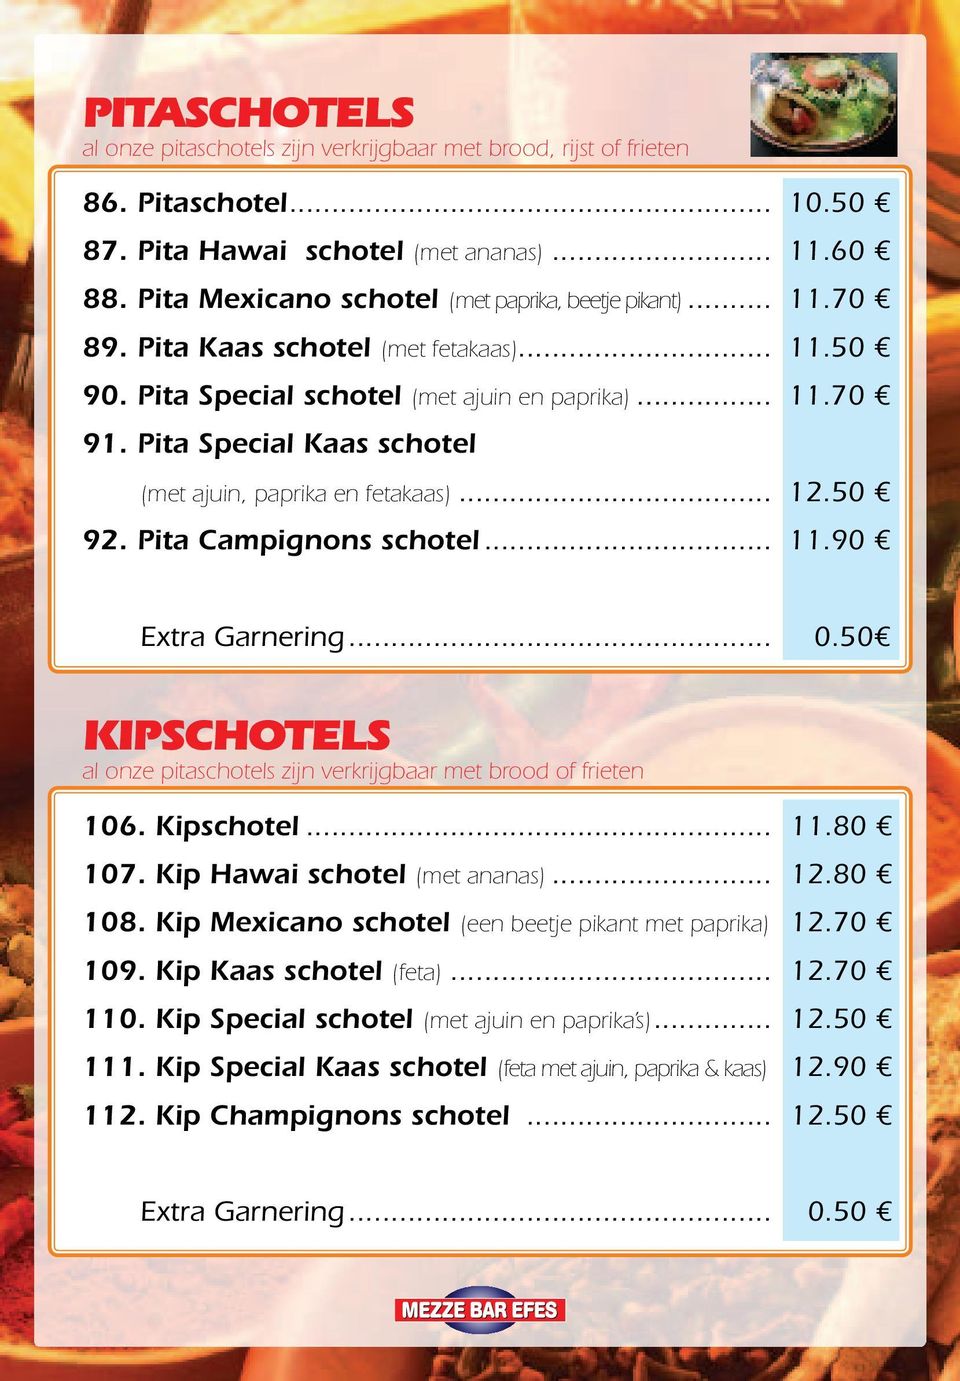 Pita Special Kaas schotel (met ajuin, paprika en fetakaas)... 12.50 92. Pita Campignons schotel... 11.90 Extra Garnering... 0.